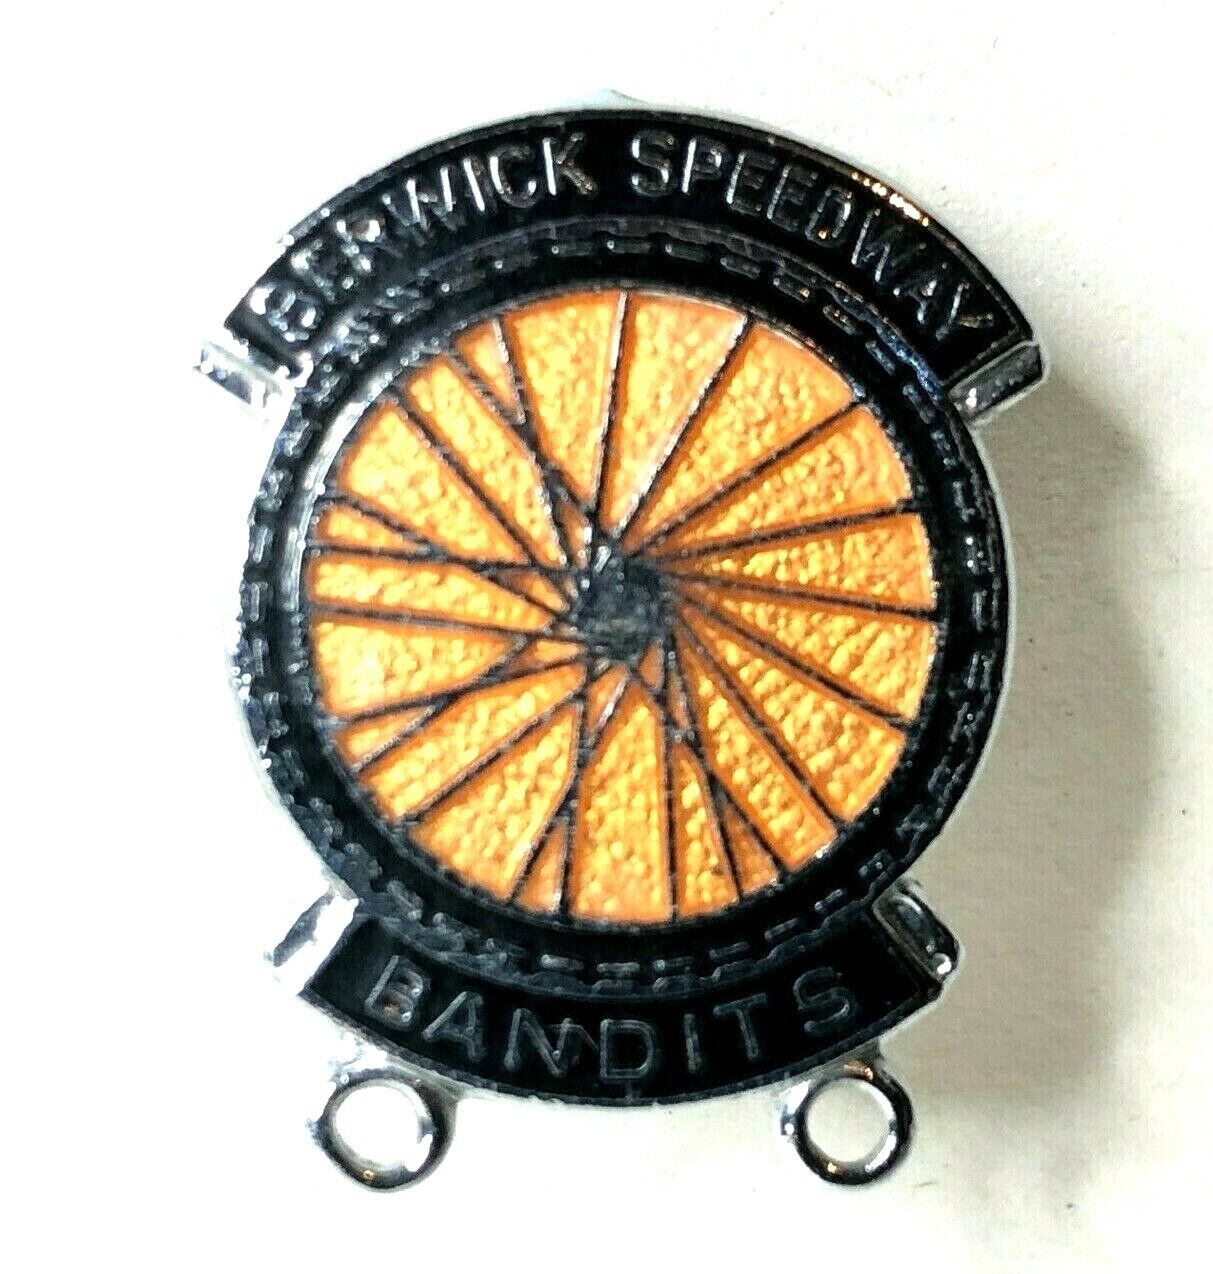 1974 Berwick Speedway The Bandits enamel badge 25 x 20 mm 